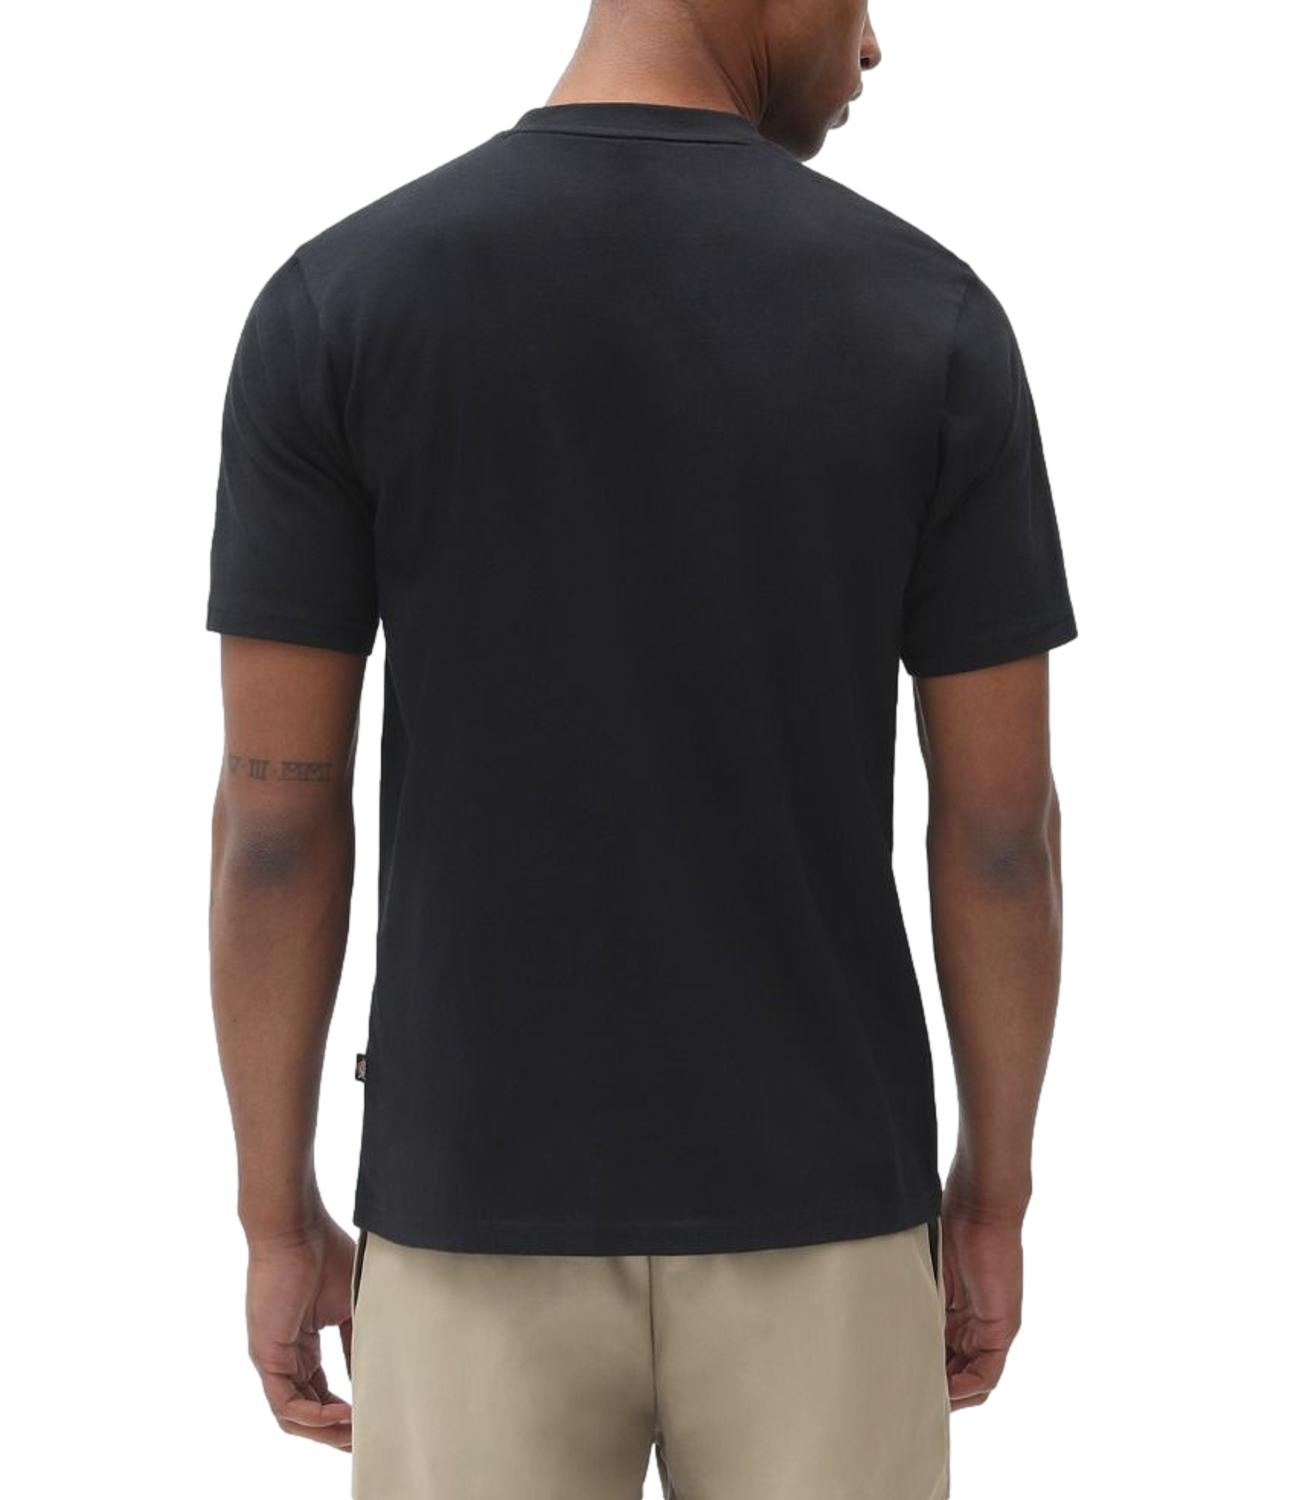 T-shirt Dickies nera con logo grande